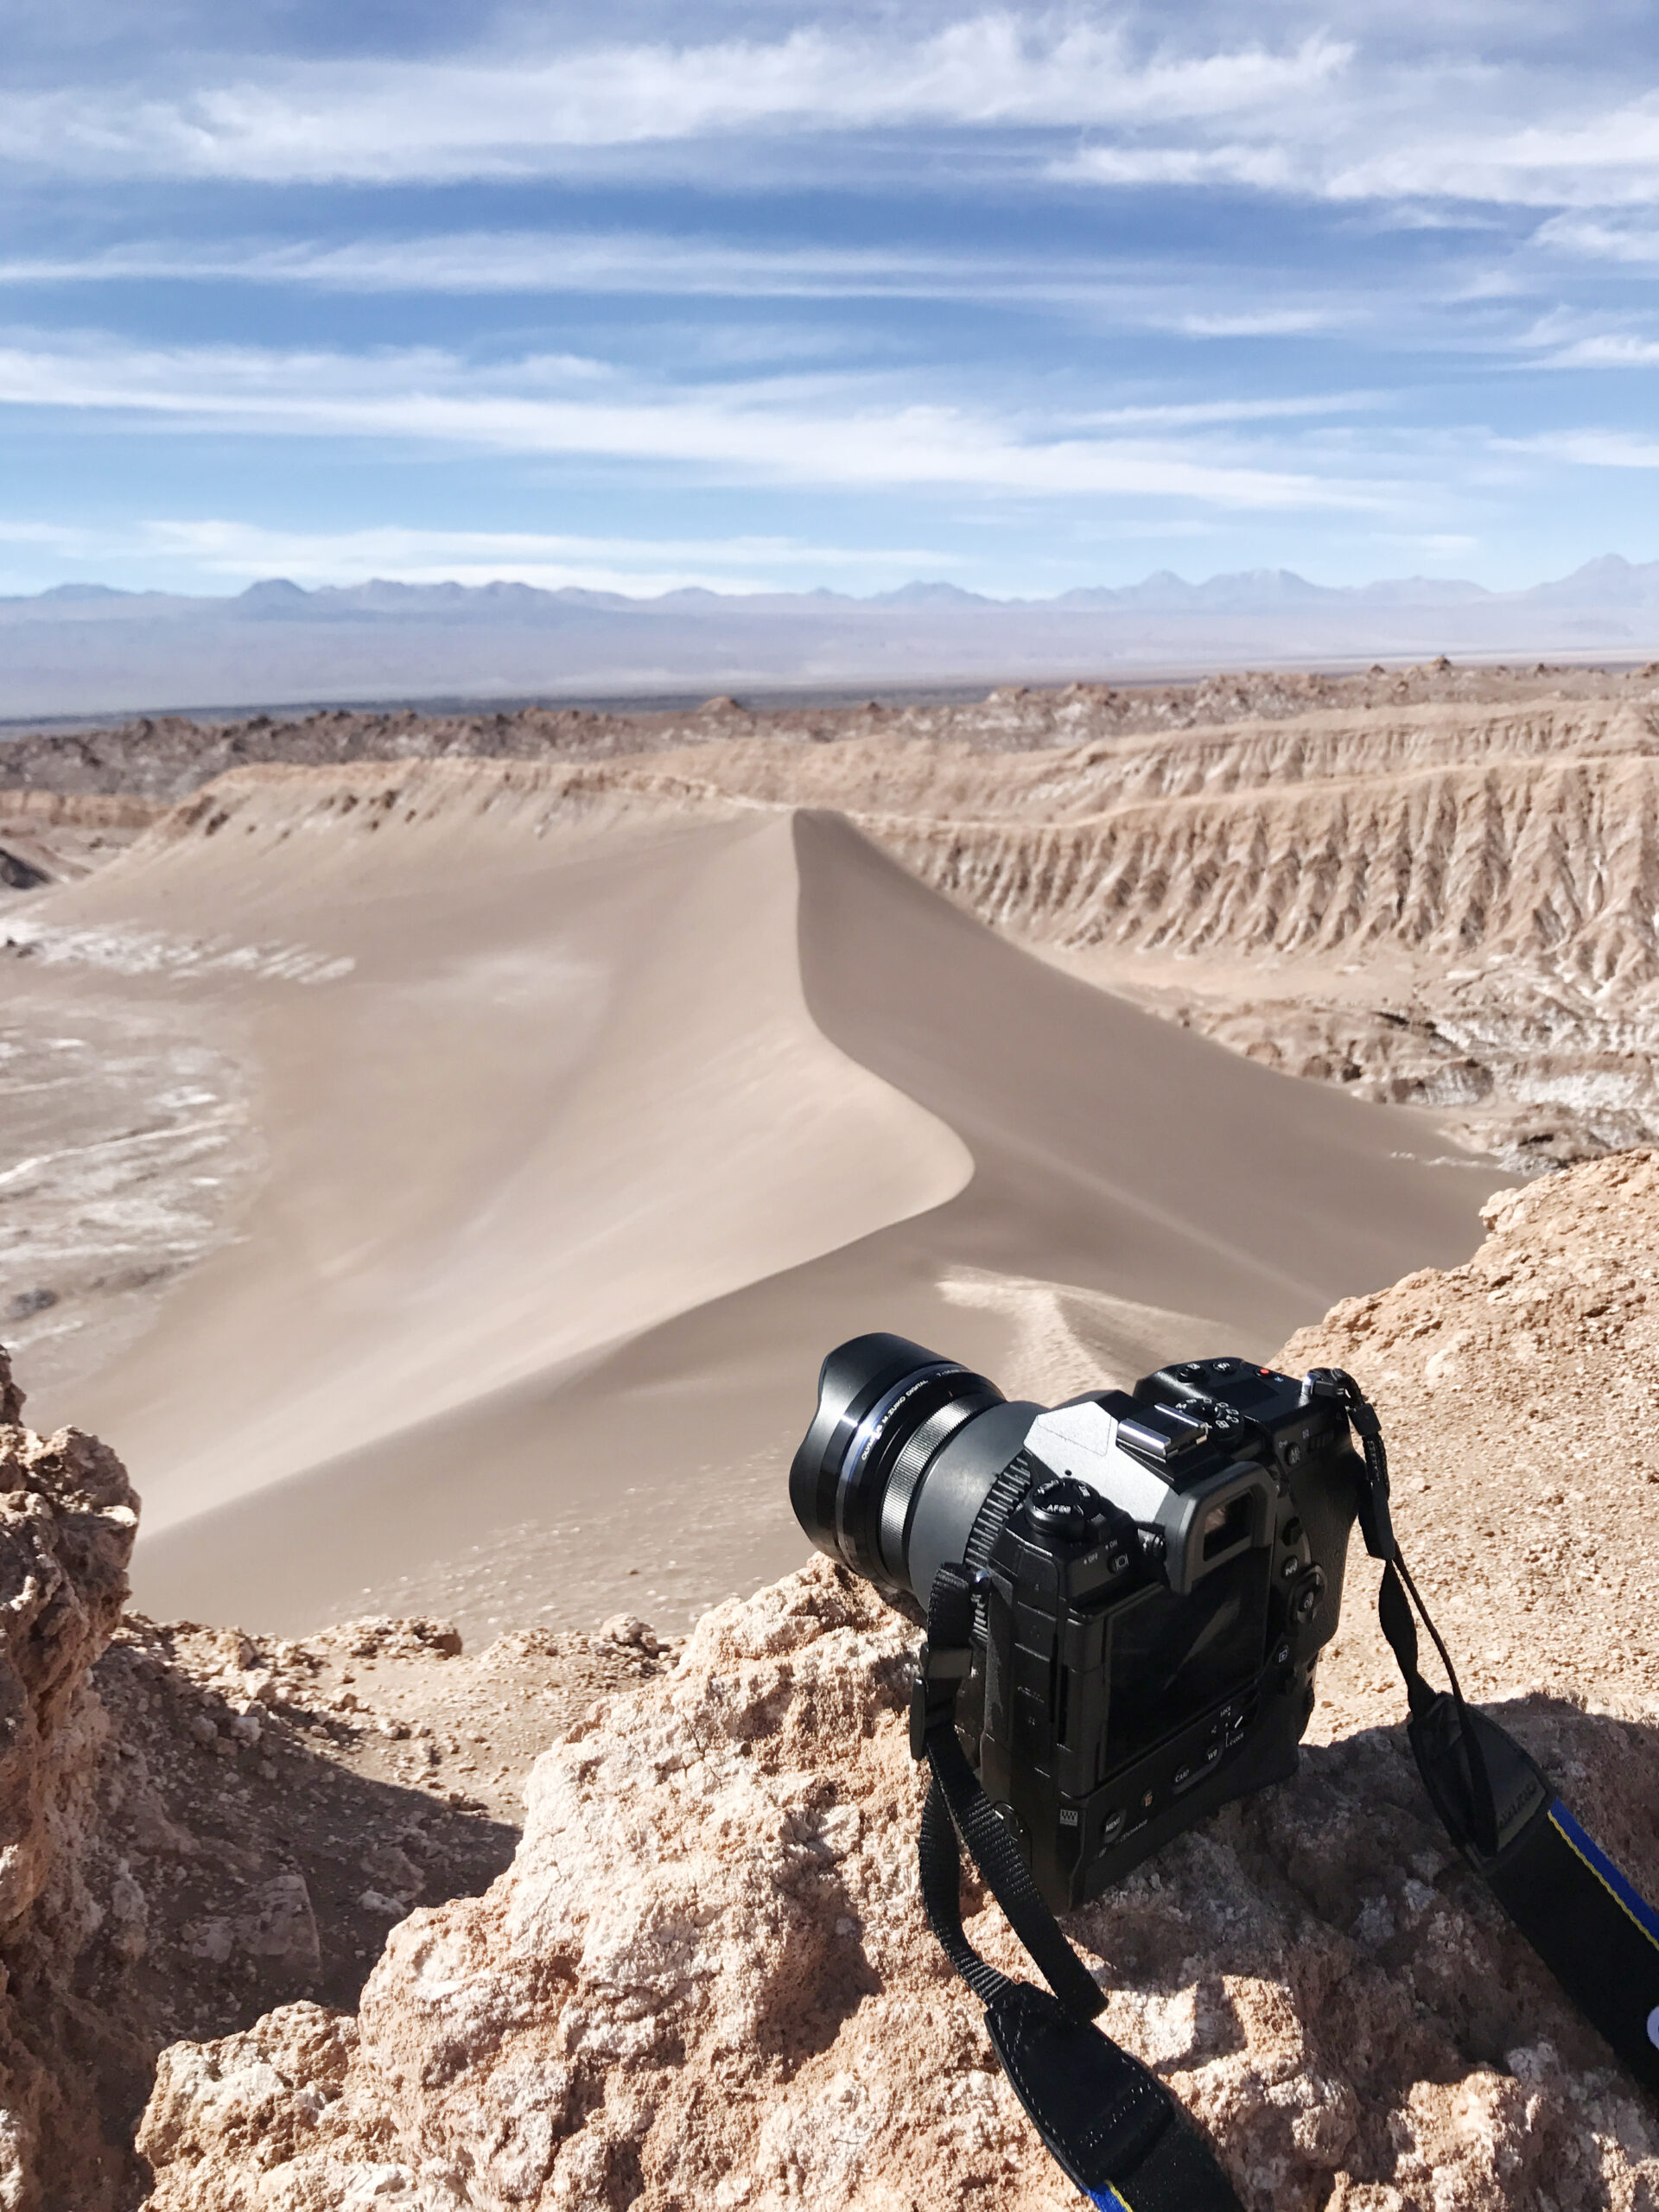 Photographing in the Atacama Desert, Olympus E-M1X